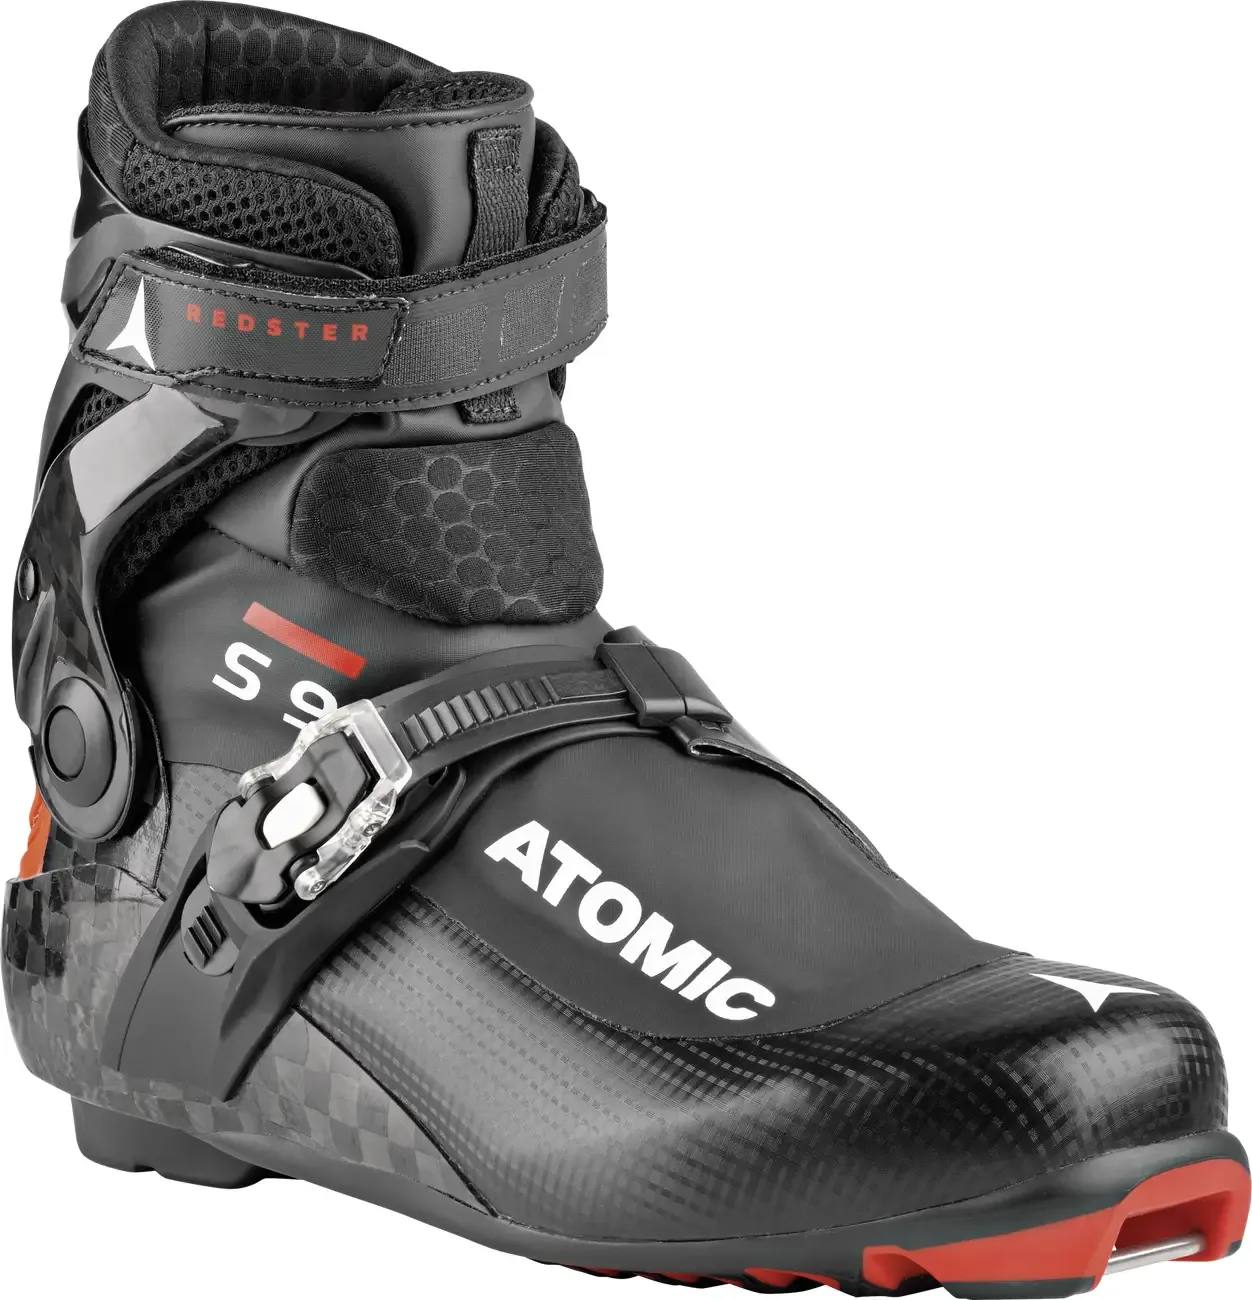 Atomic Redster S9 Skate 22/23 Boots UK 10